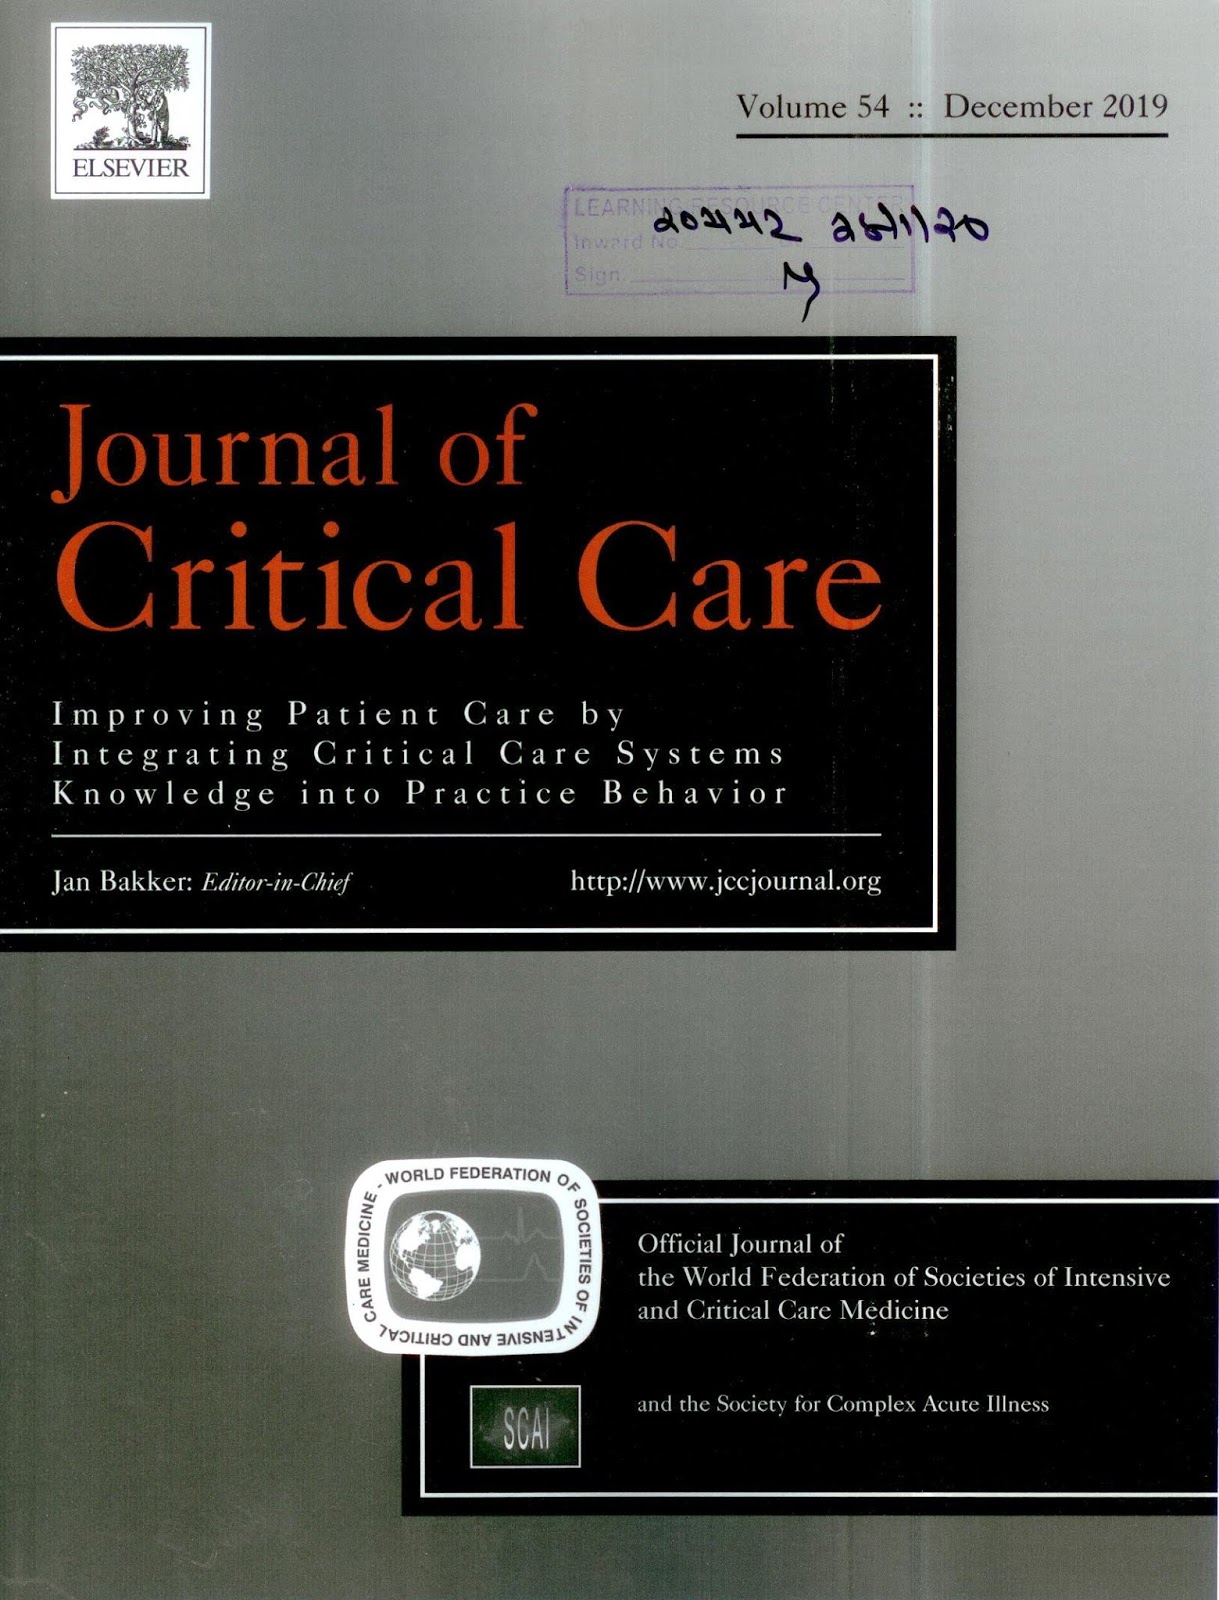 https://www.sciencedirect.com/journal/journal-of-critical-care/vol/54/suppl/C